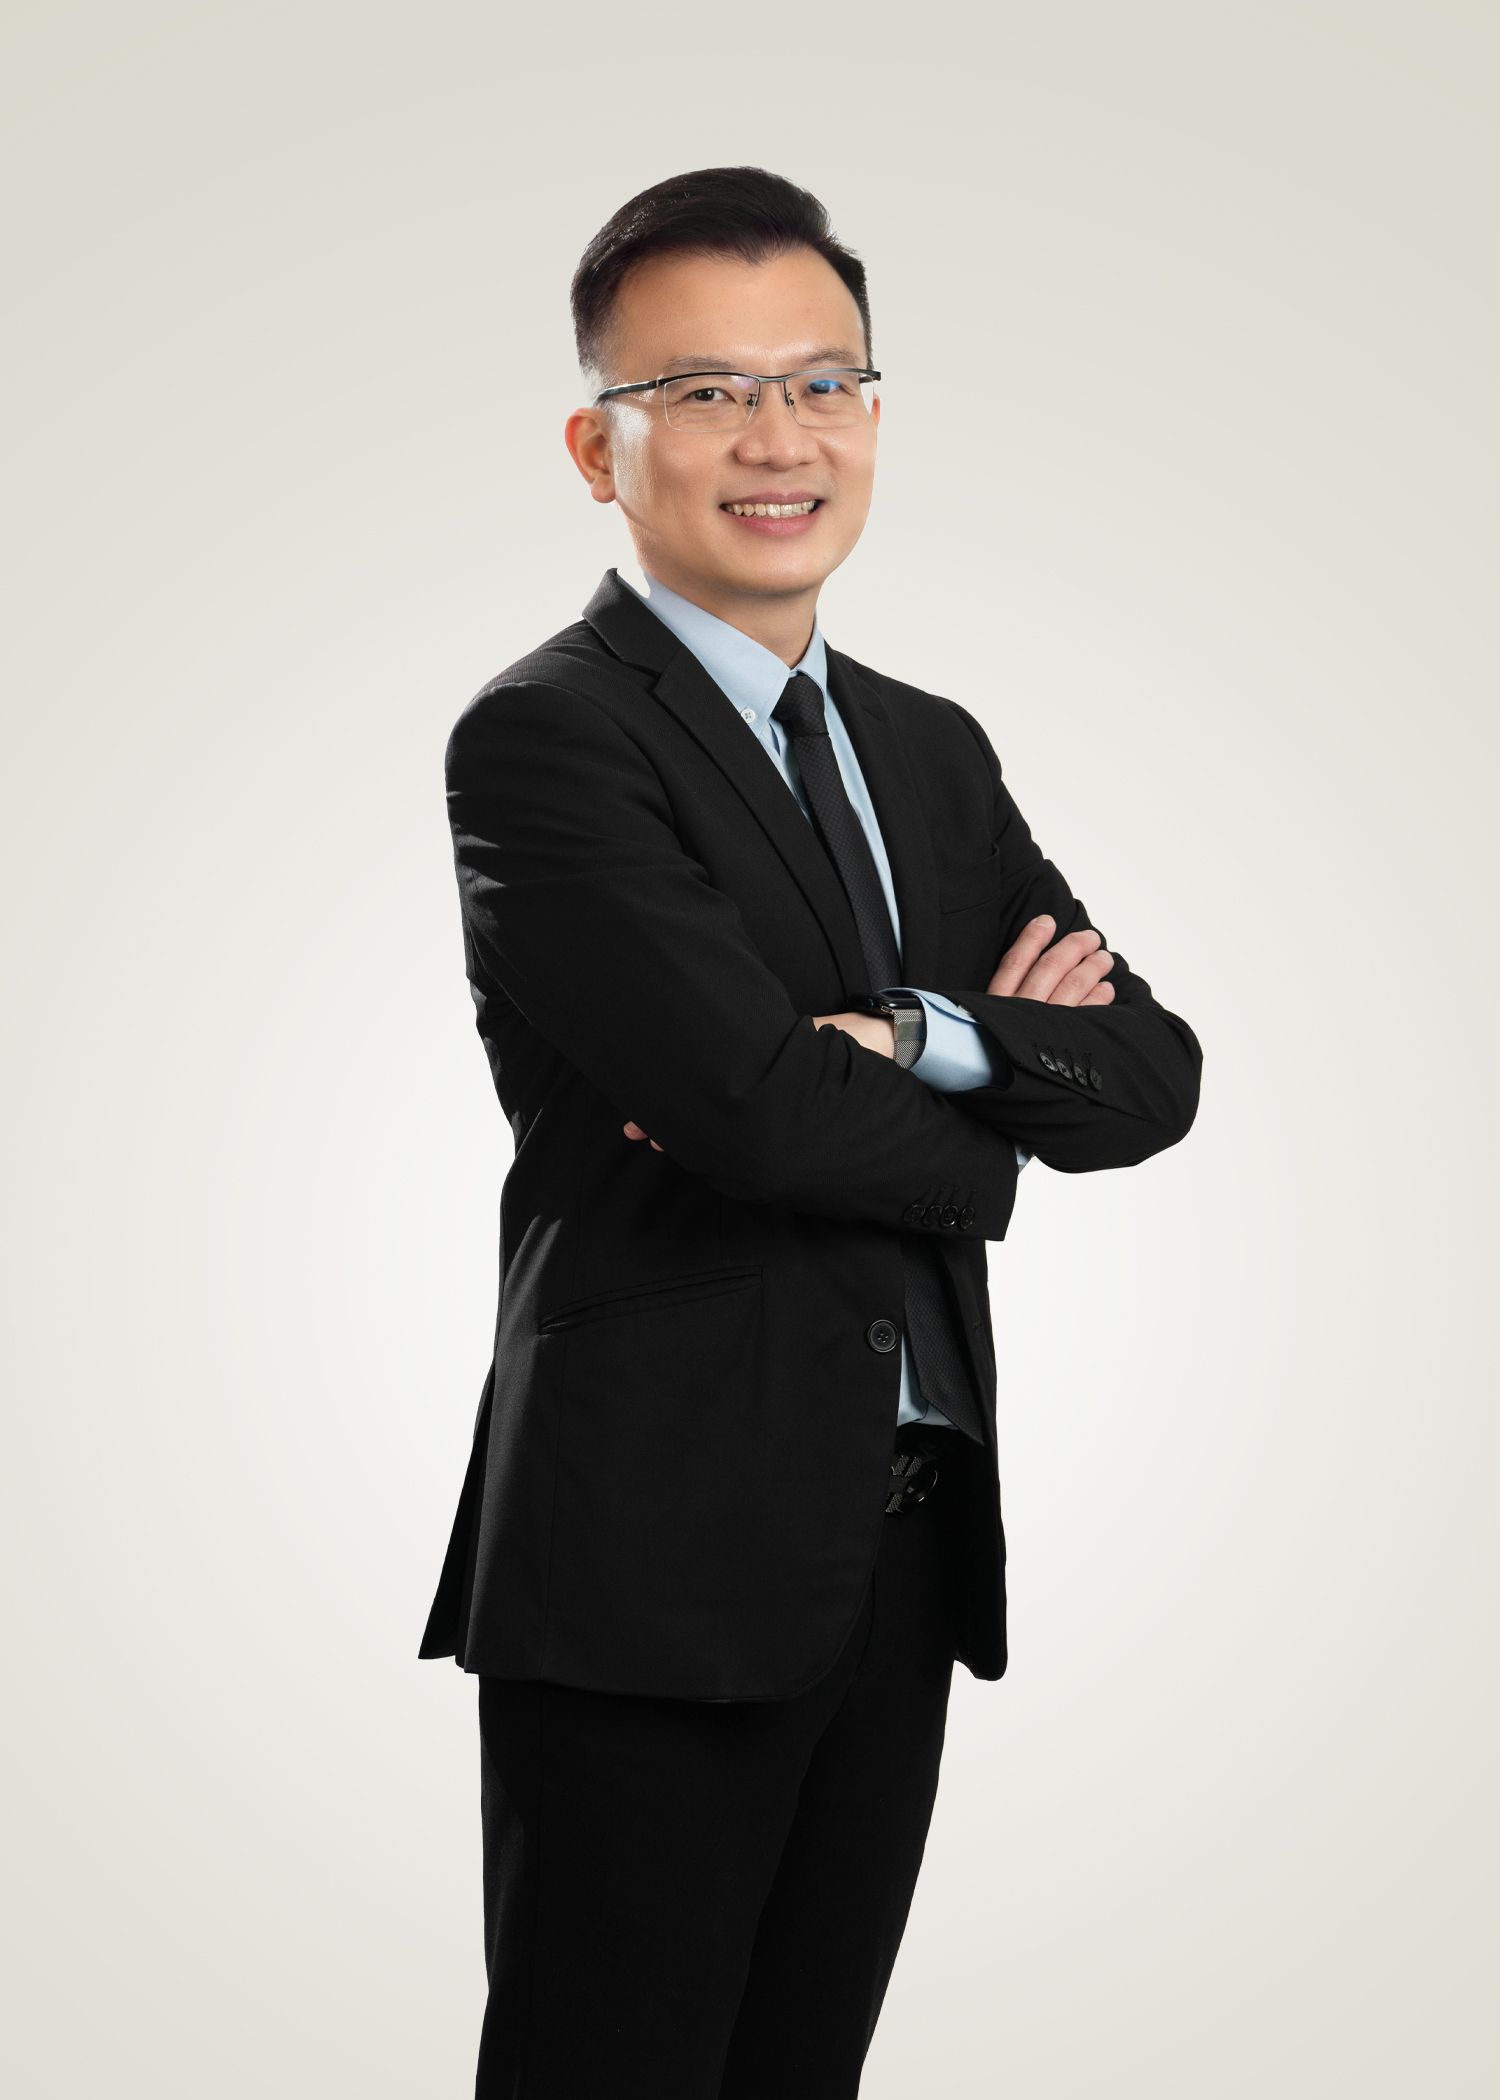 Managing Director of DC Healthcare, Dr. Chong Tze Sheng